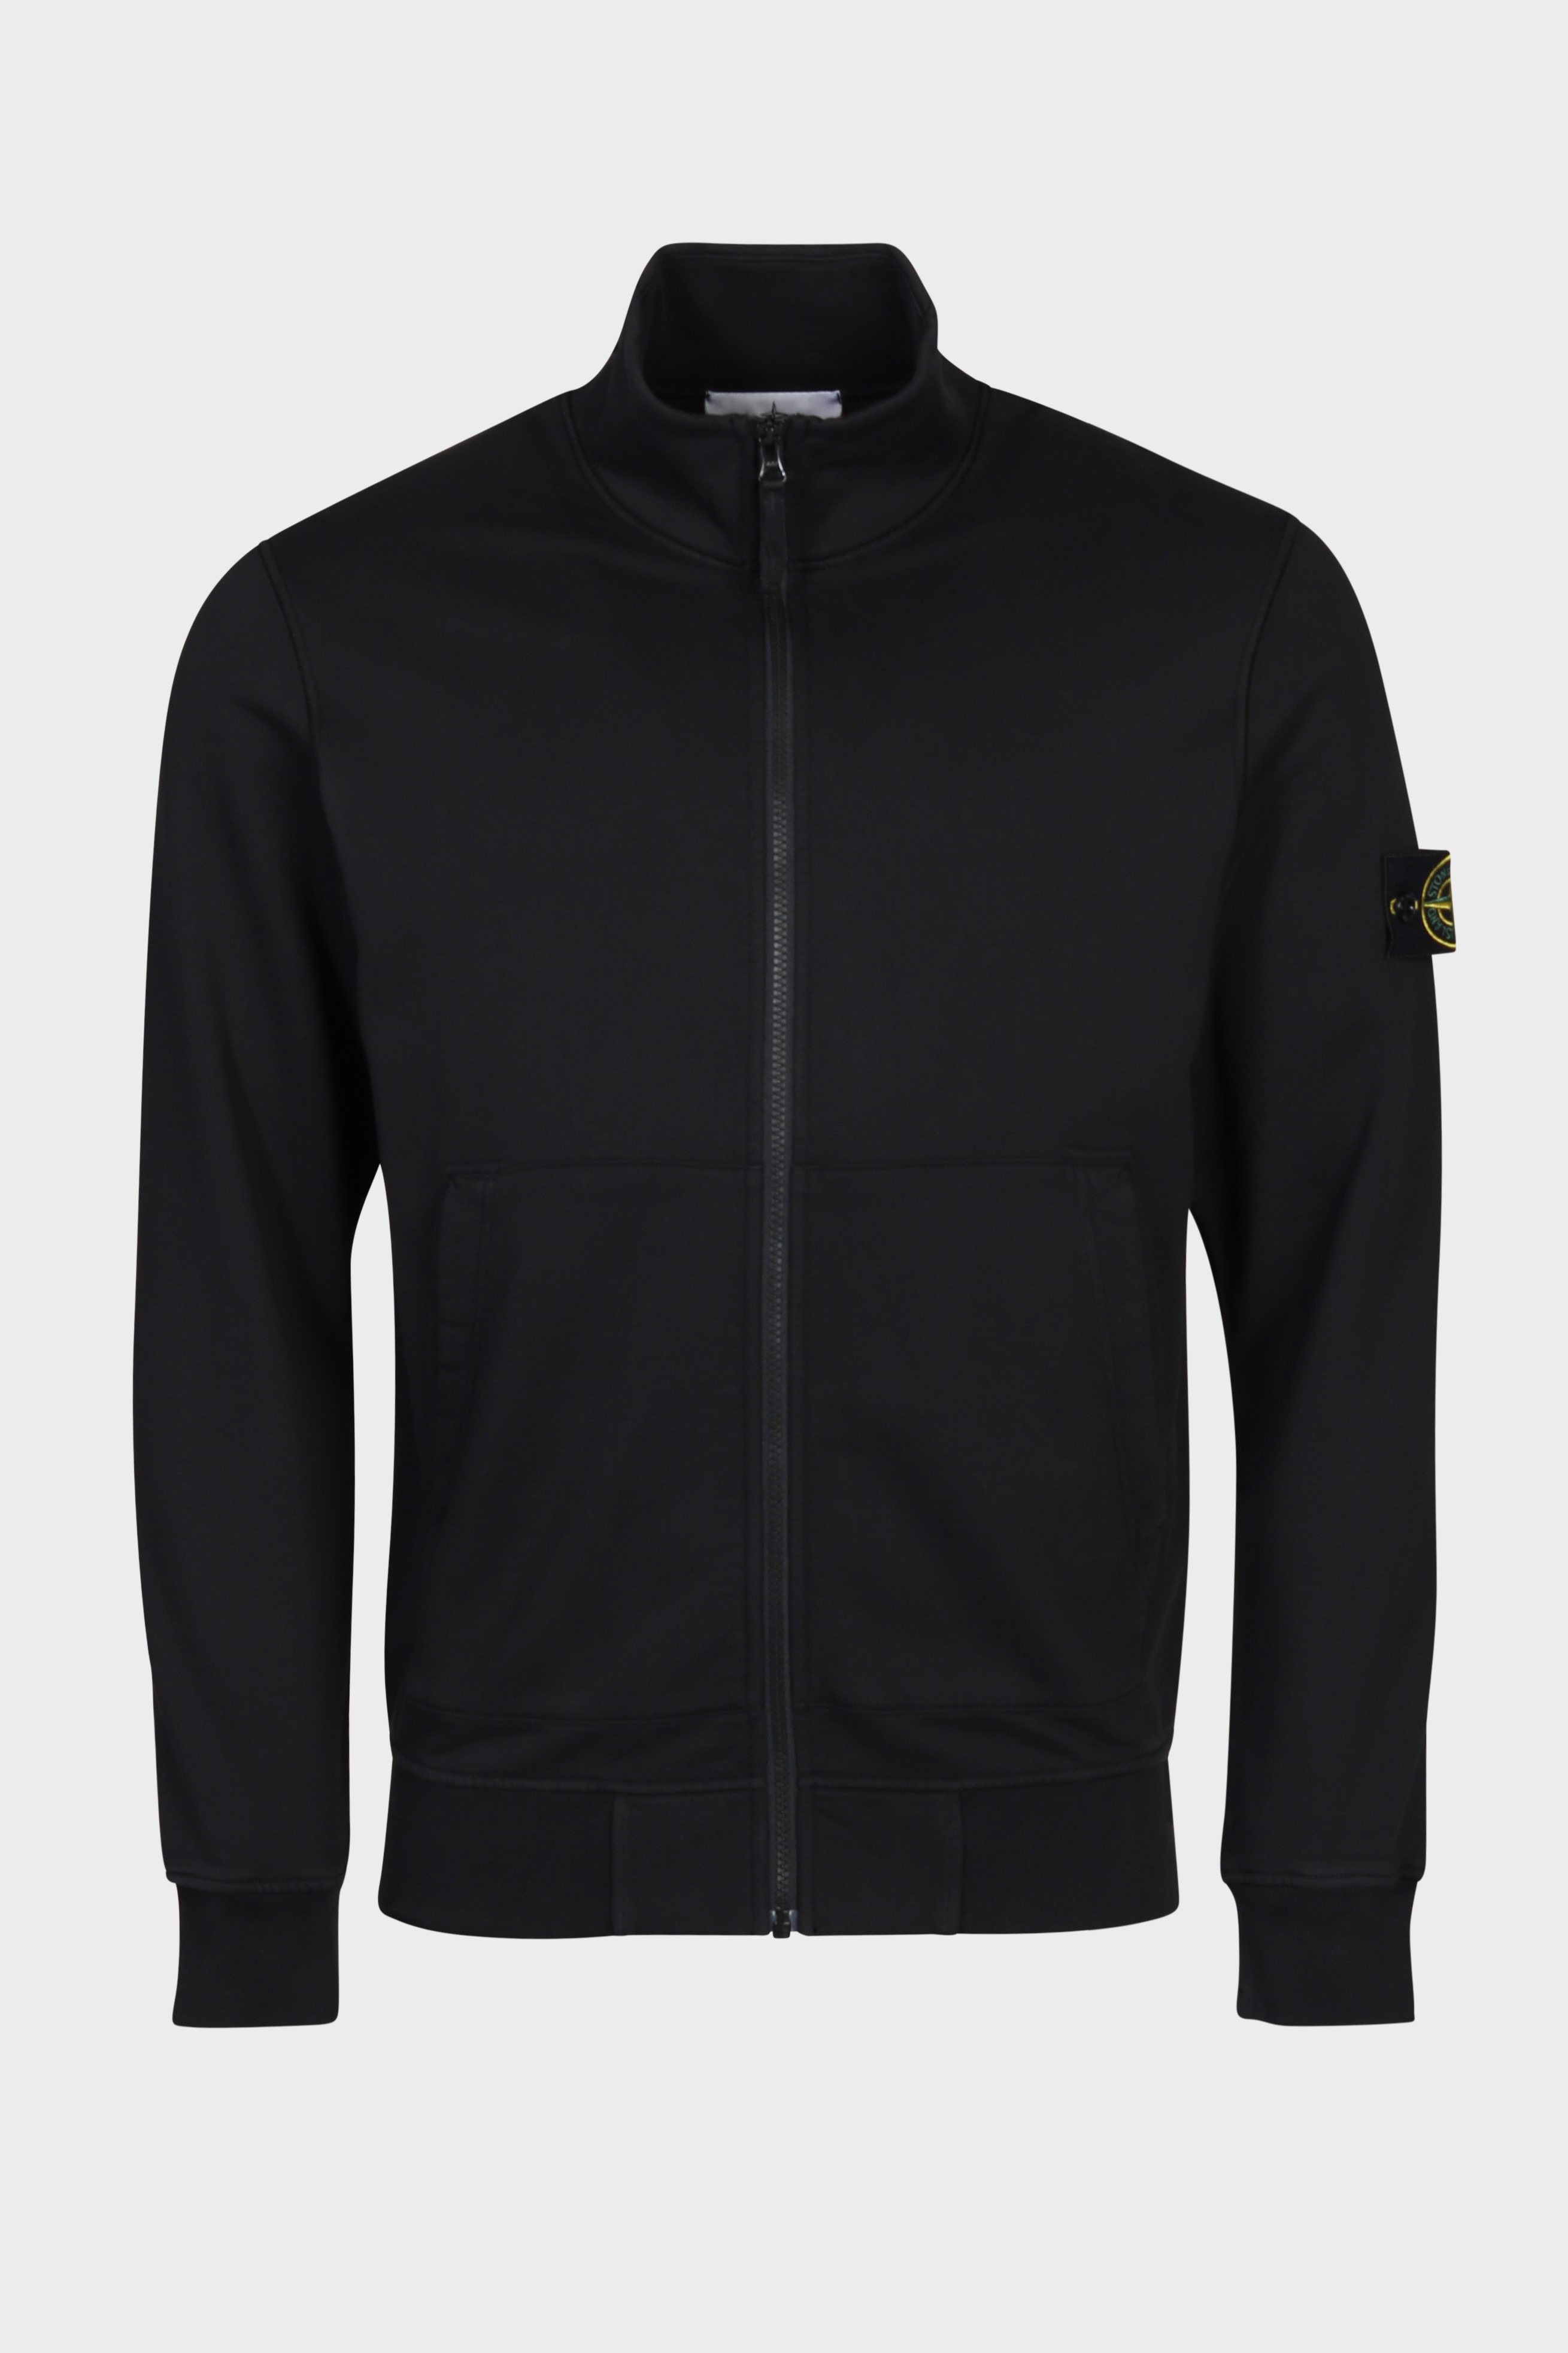 STONE ISLAND Zip Sweatshirt in Black 2XL